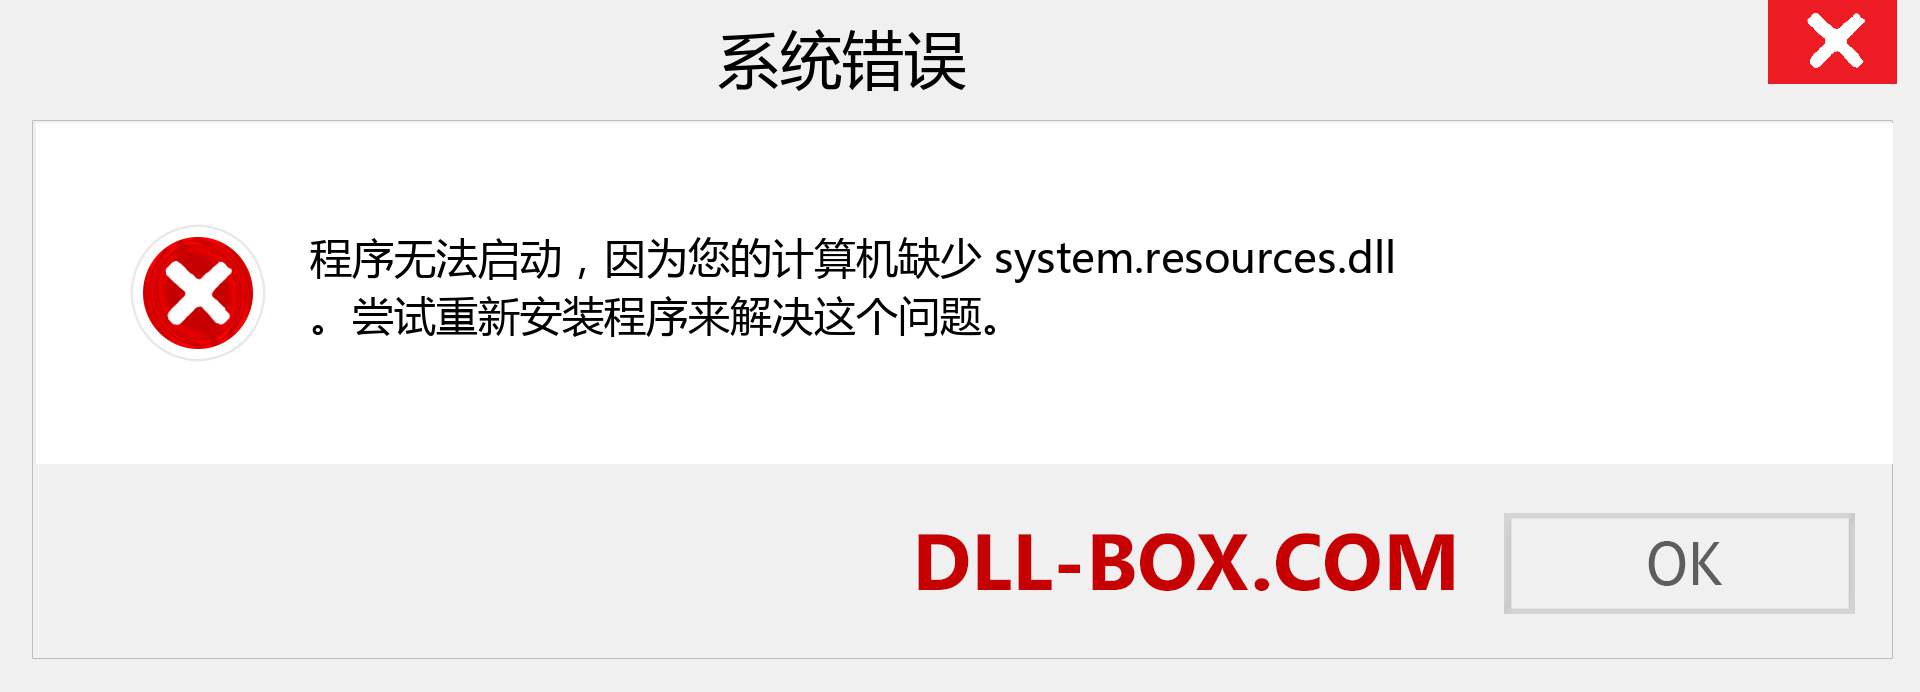 system.resources.dll 文件丢失？。 适用于 Windows 7、8、10 的下载 - 修复 Windows、照片、图像上的 system.resources dll 丢失错误